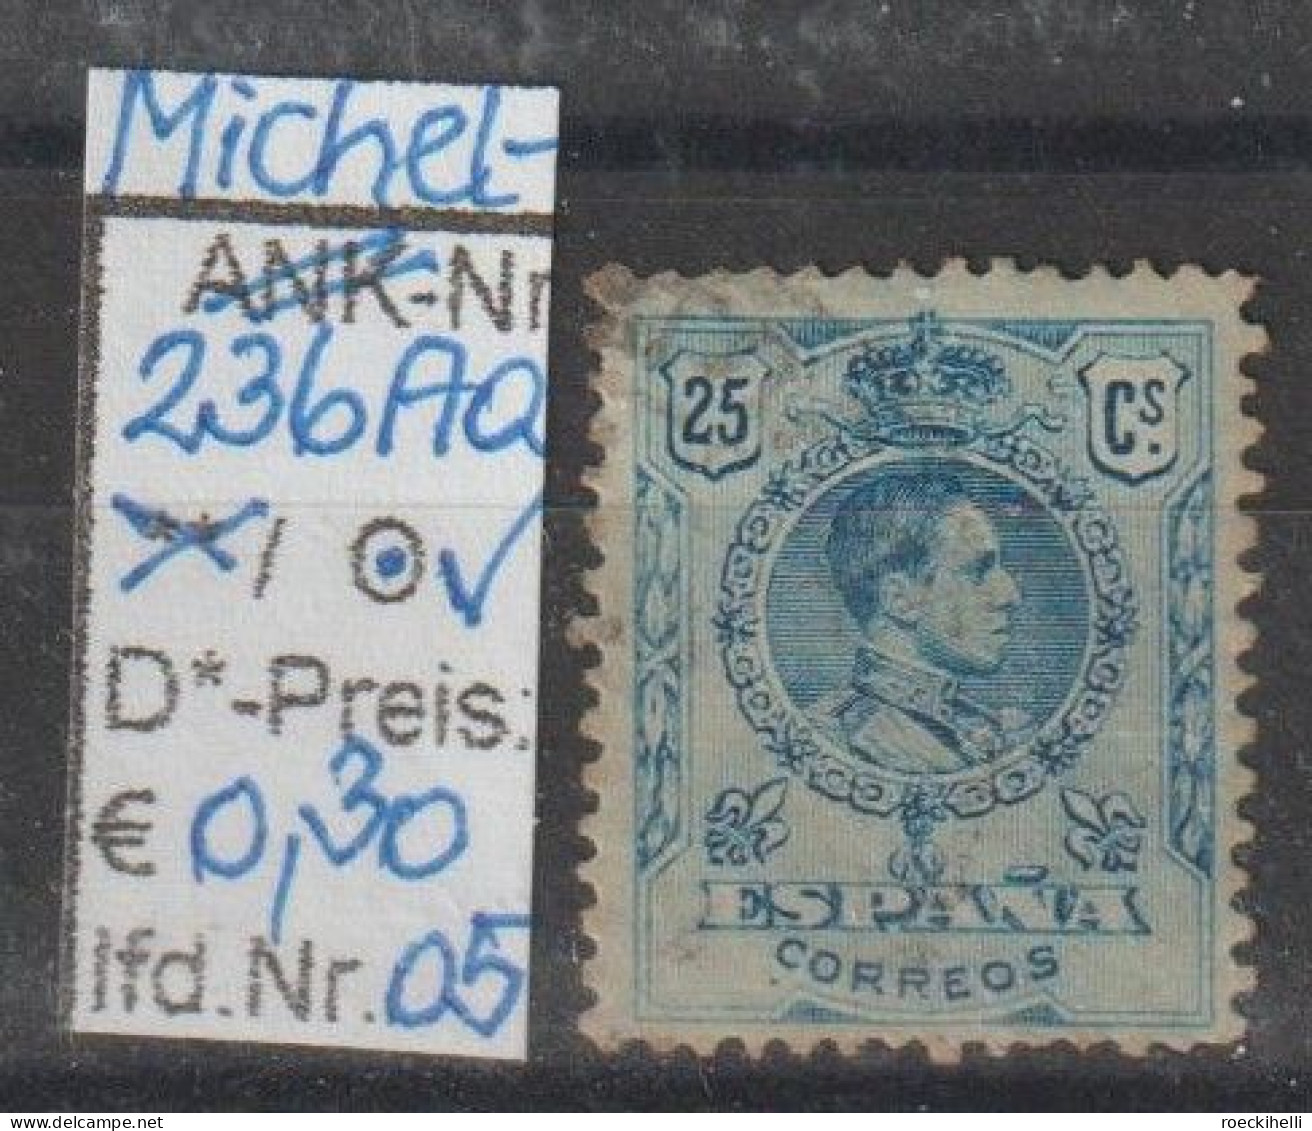 1910 - SPANIEN - FM/DM "König Alfons XIII im Medaillon" 25 C blau - o gestempelt - s.Scan (236Aao 01-06 esp)